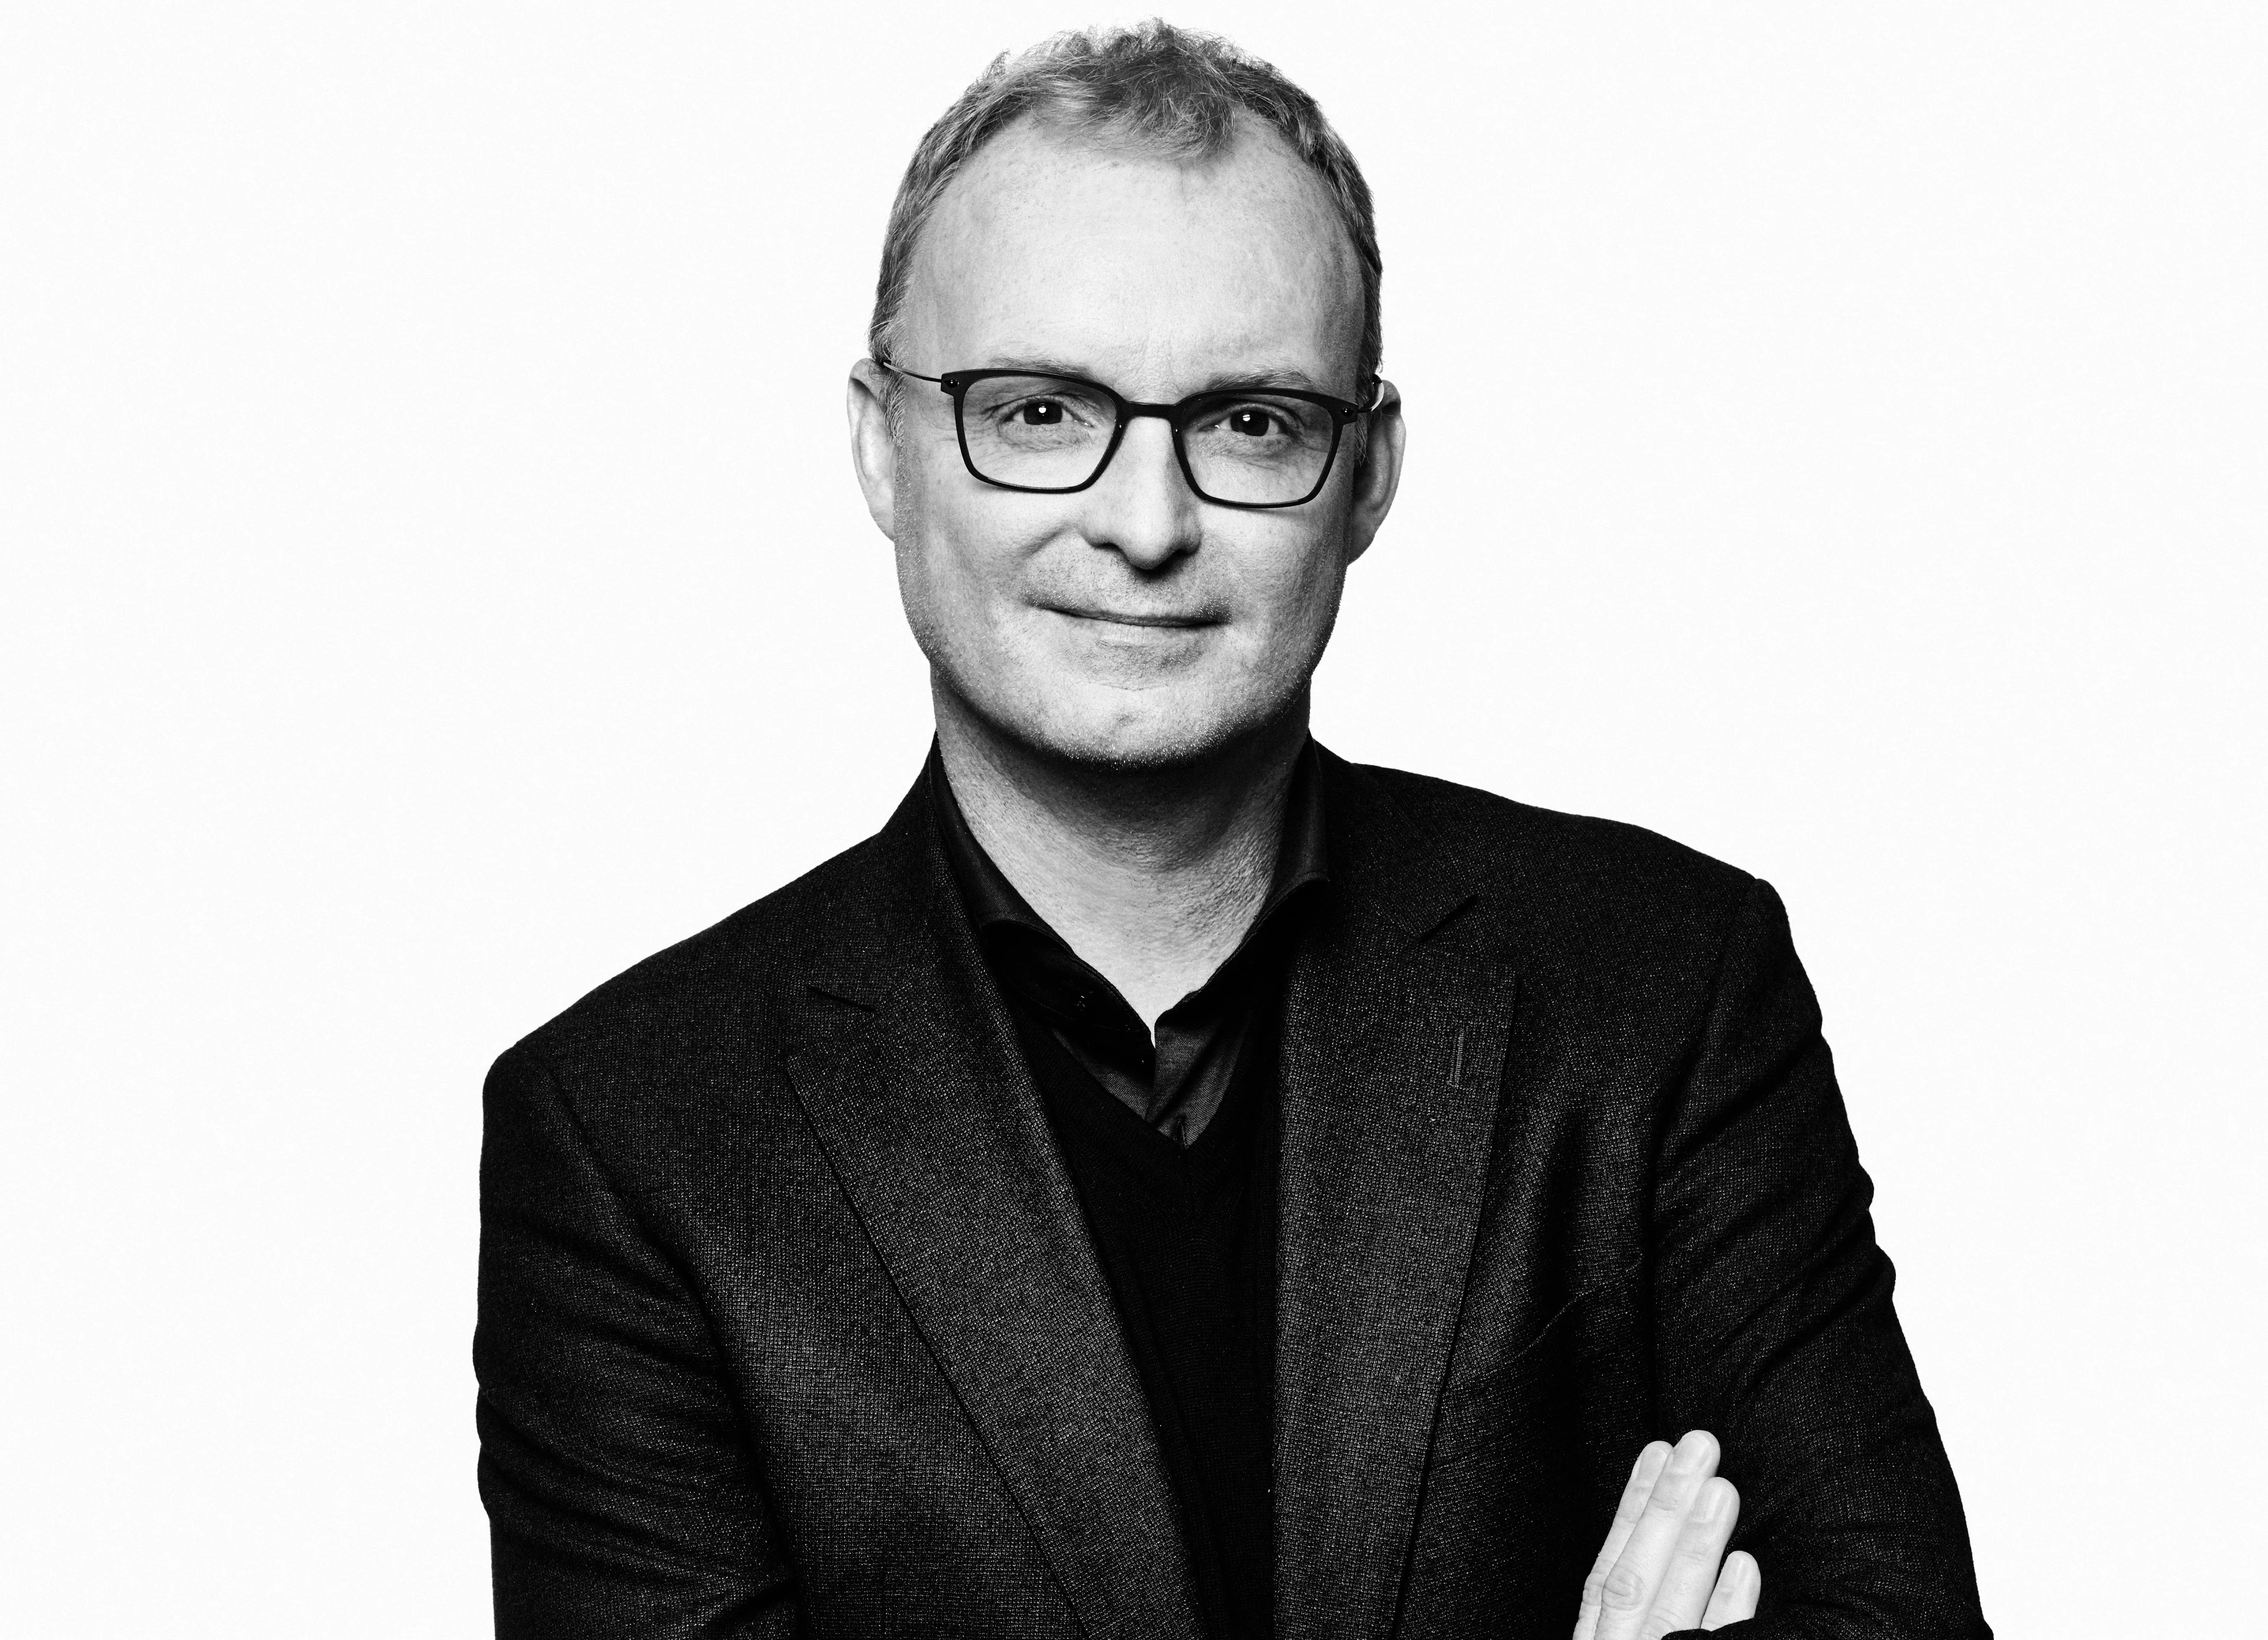 Portret van Erik Roddenhof in zwart-wit